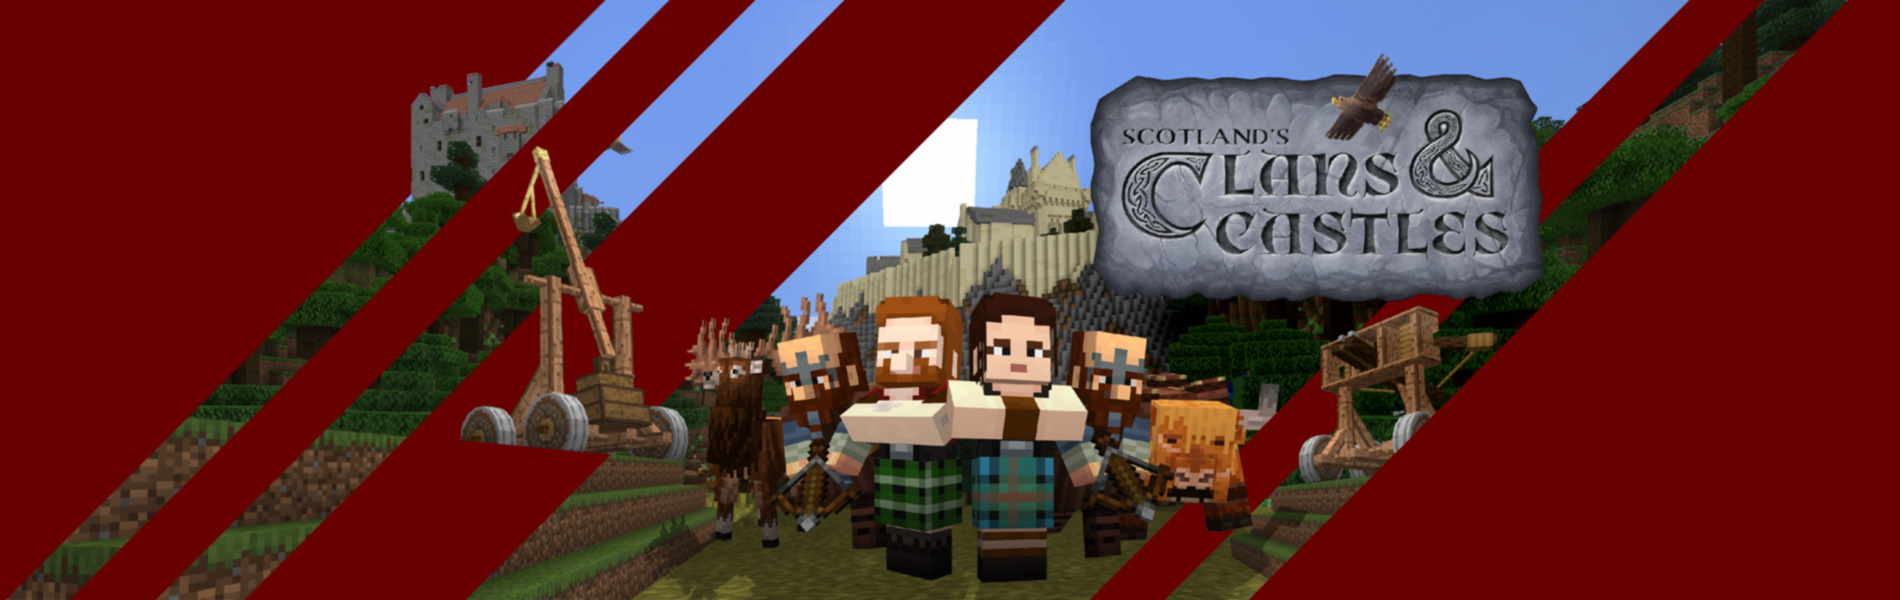 4j Studios Scottish Award Winning Game Development Studio